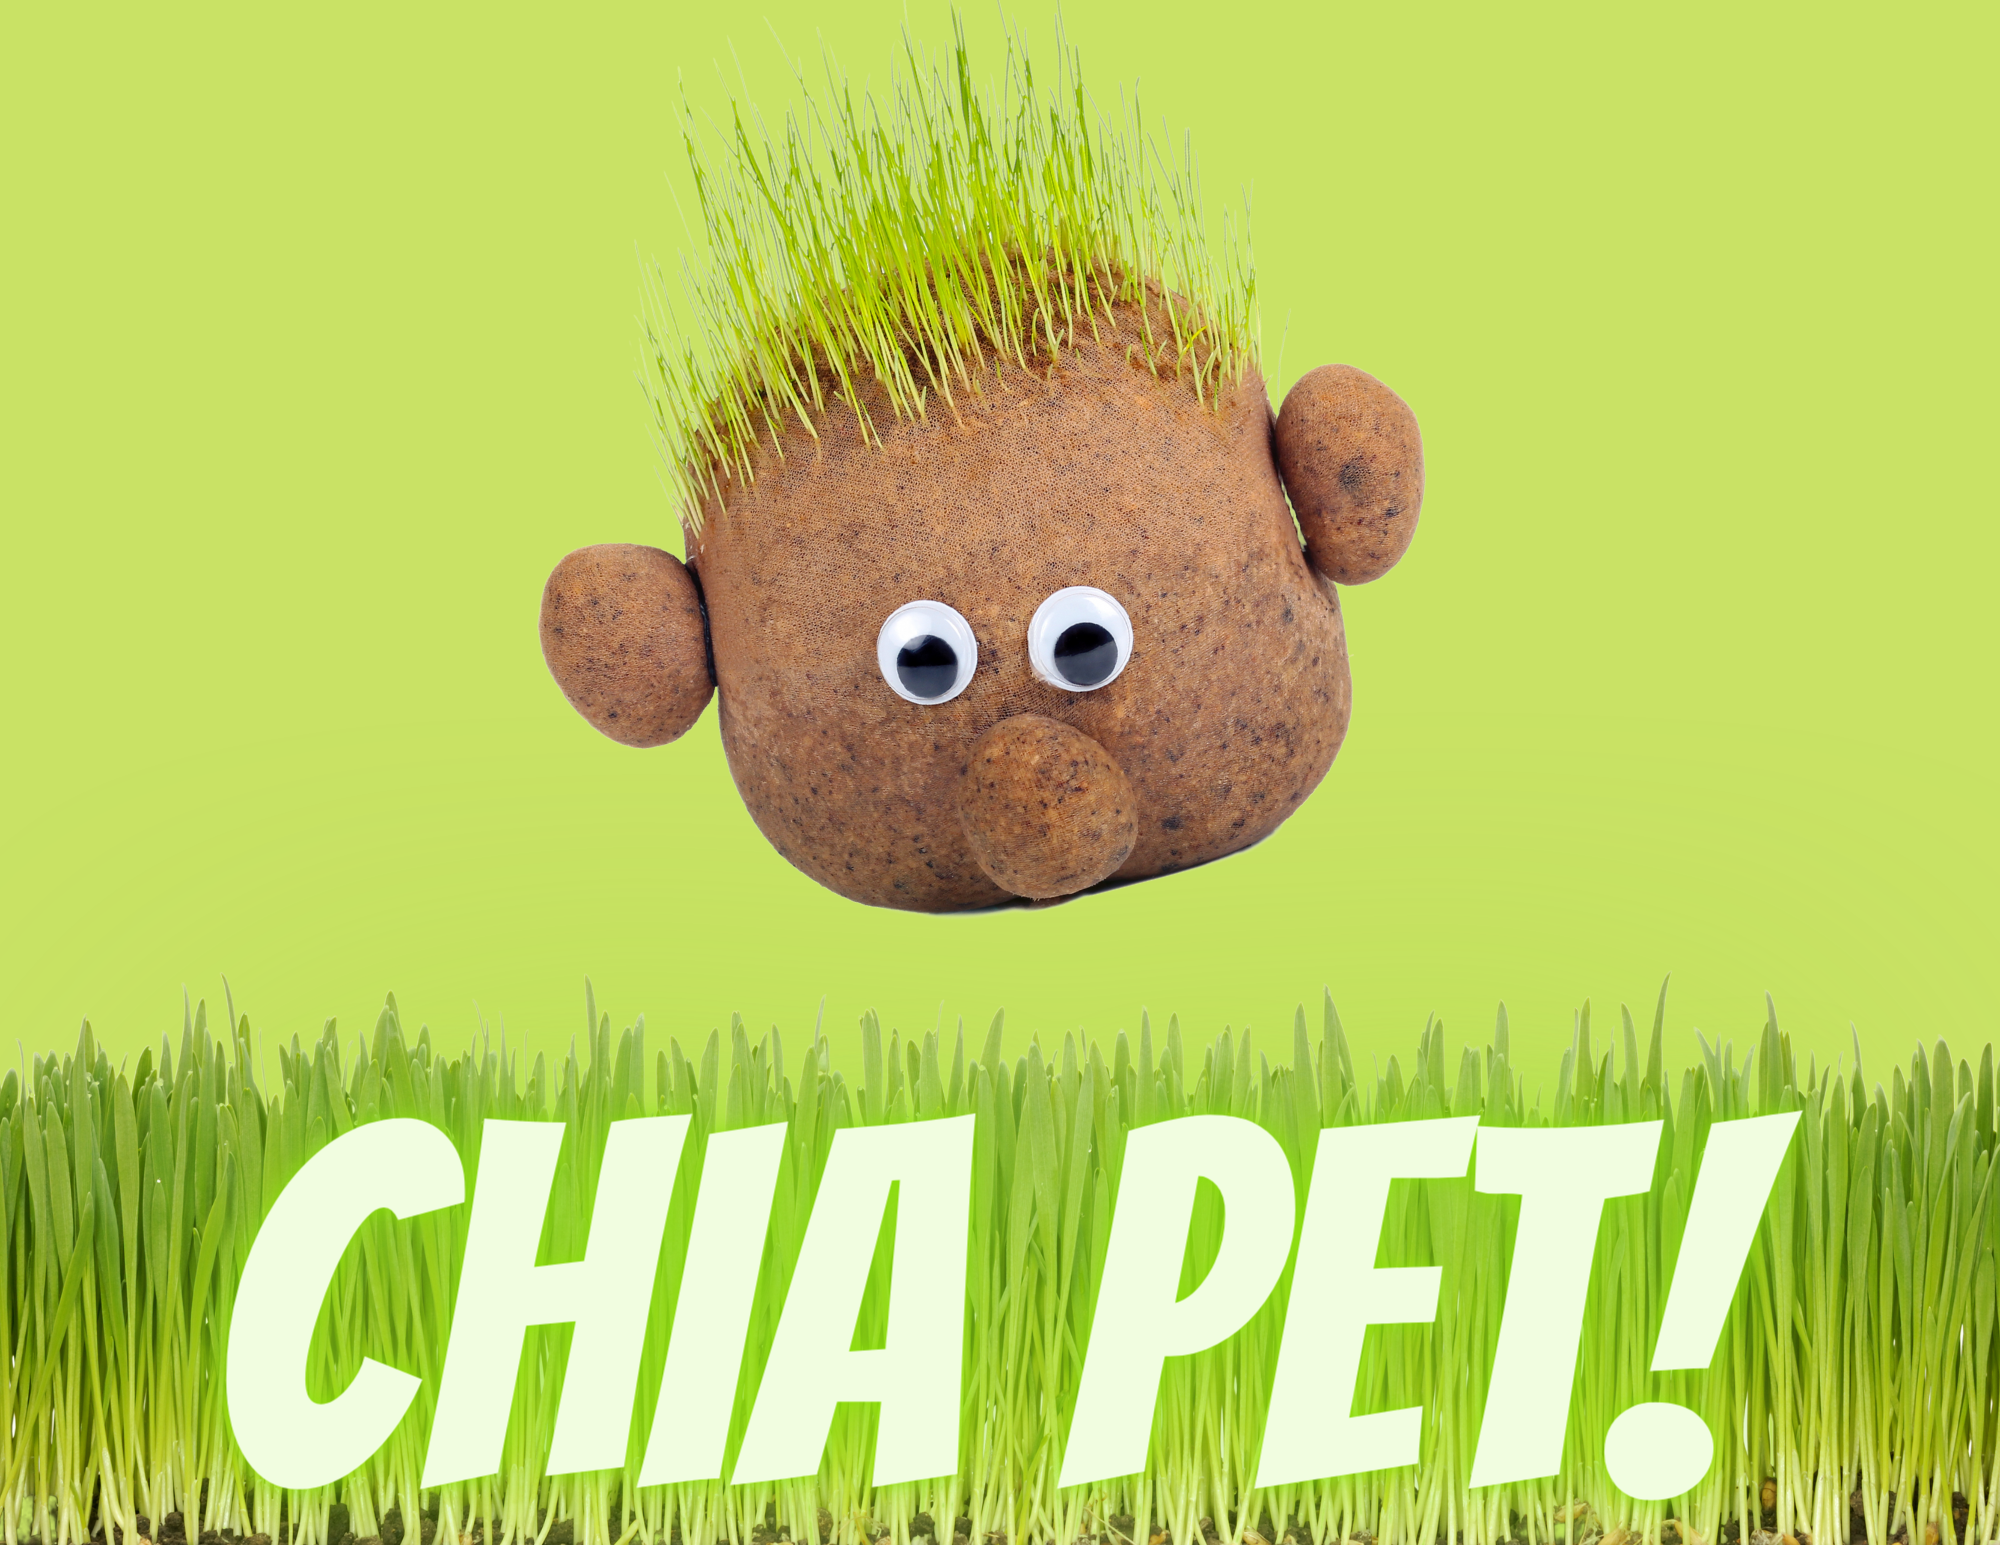 DIY Chia Head and "Chia Pet!" Text